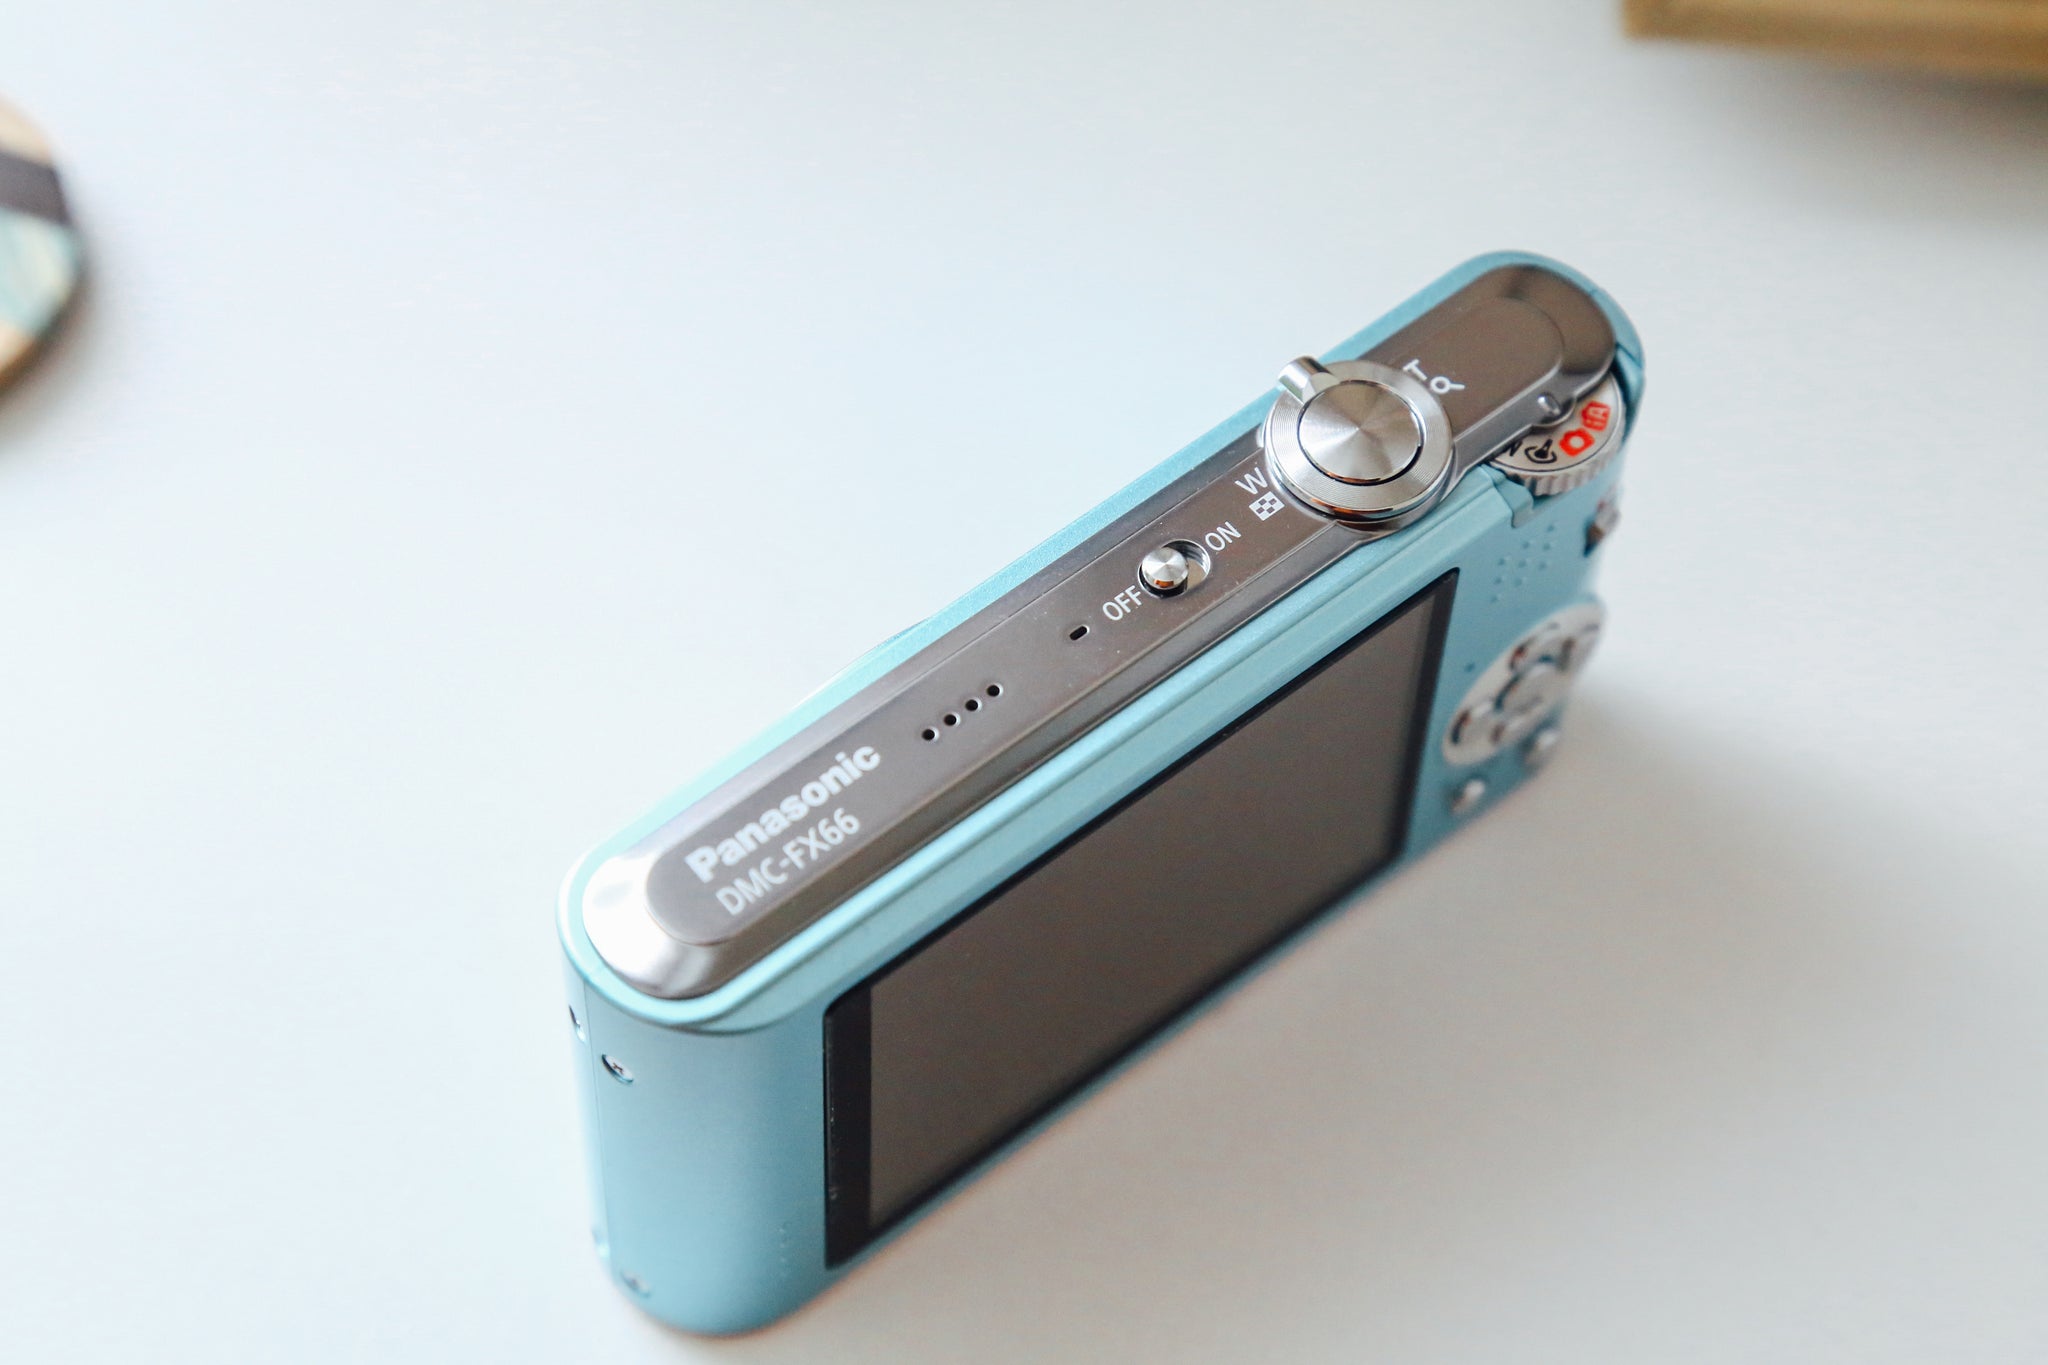 Panasonic Lumix DMC-FX66 デジカメ オールドコンデジ6700円にお値下げ 